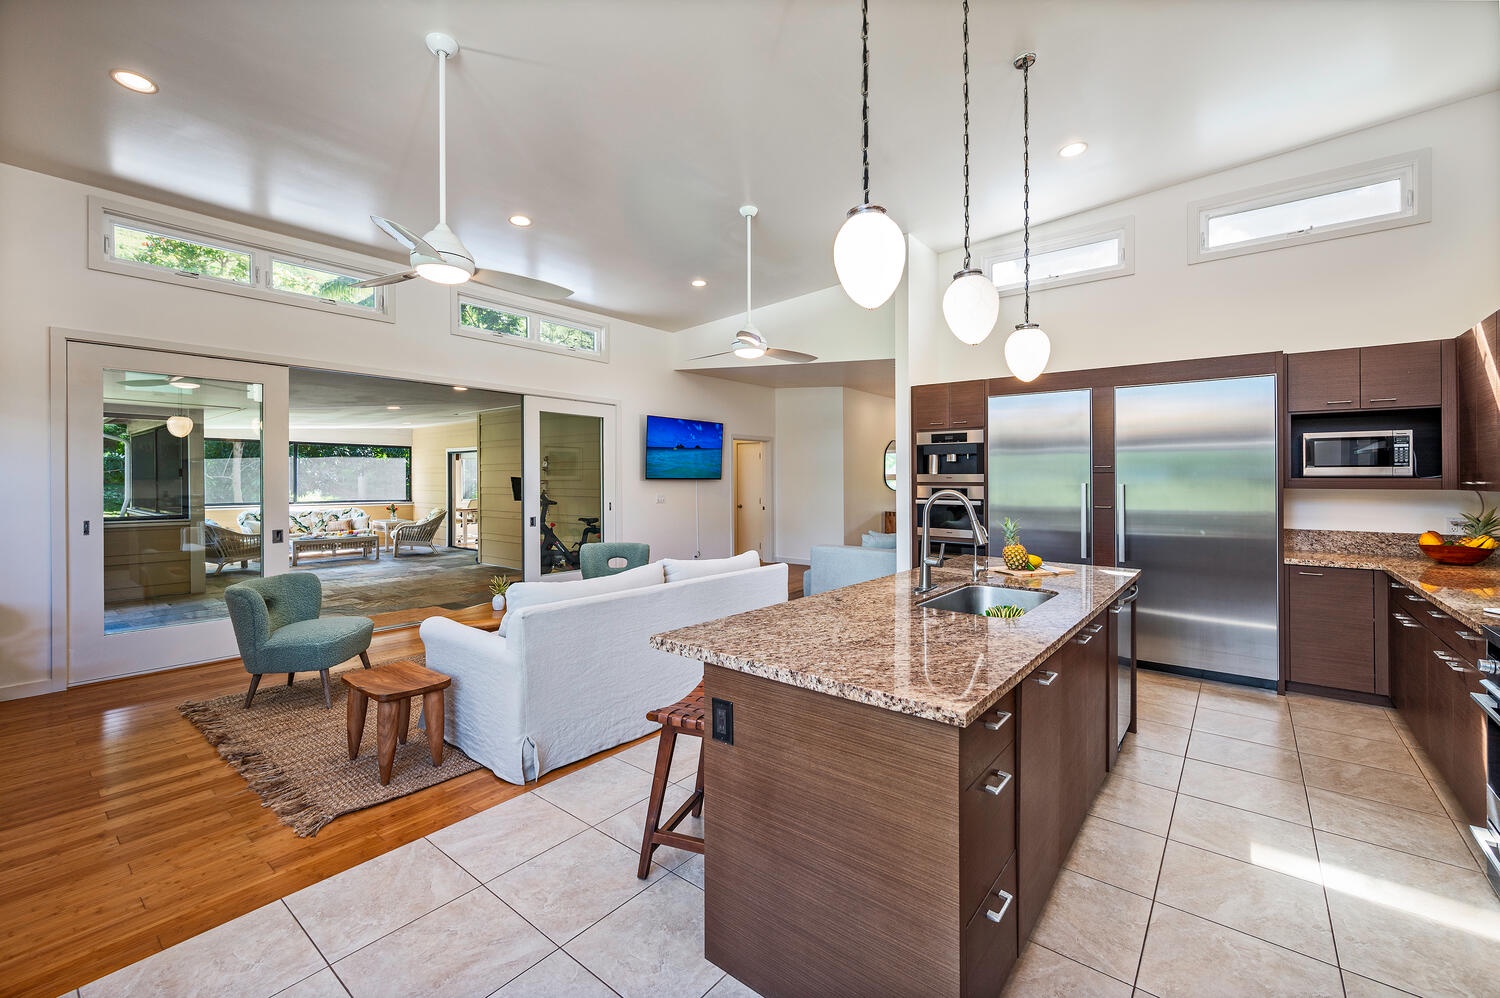 Kailua Vacation Rentals, Hale Honi La - Chefs Kitchen with open floor plan.